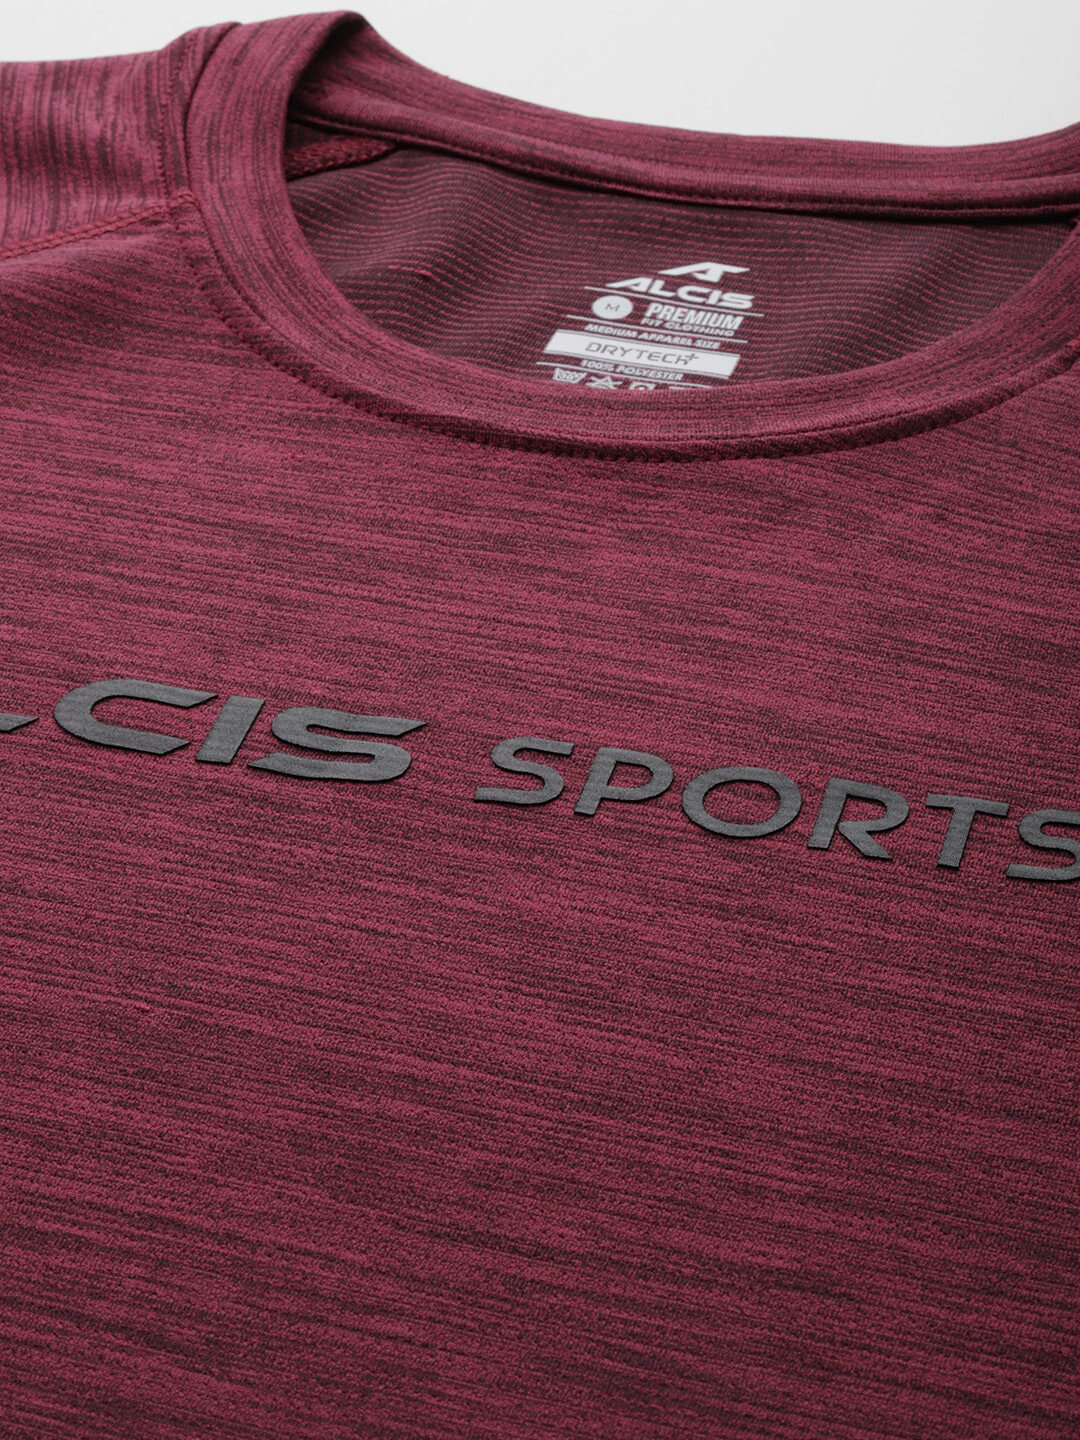 Alcis Typography Printed Dry Tech Slim Fit Training T-shirt